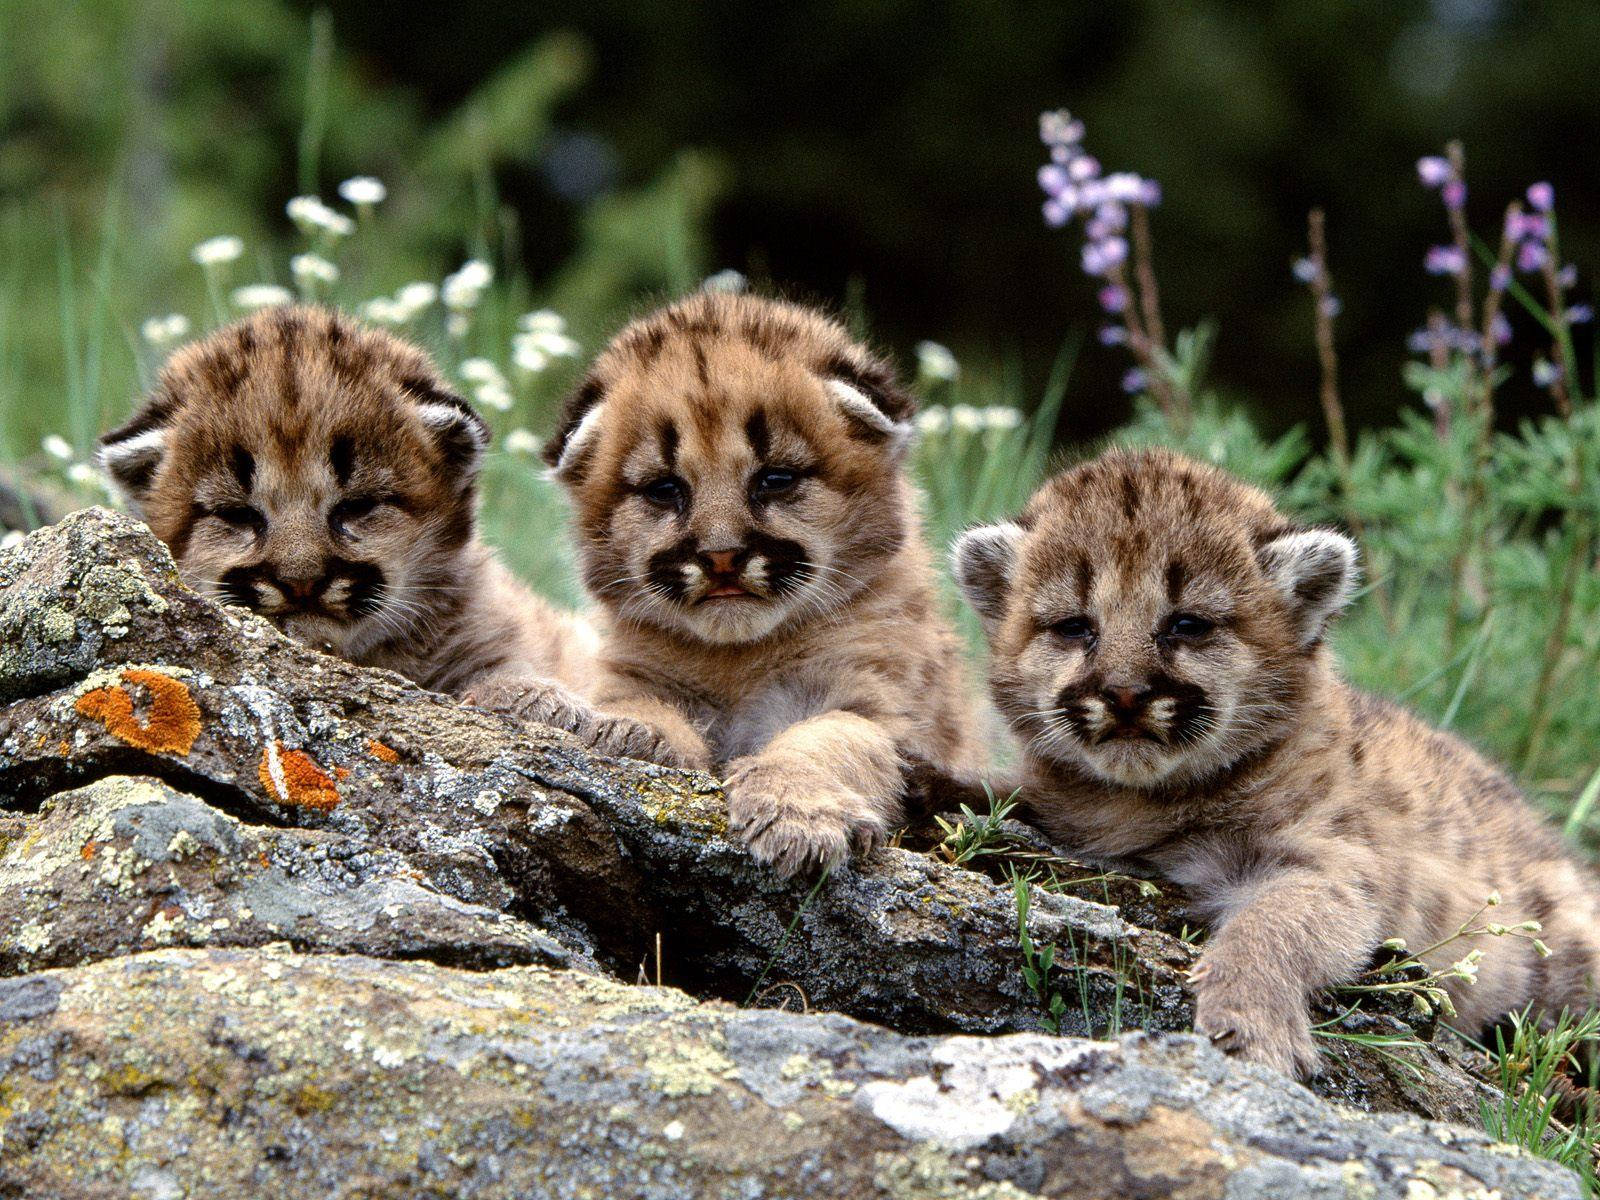 A Purr-fect Portrait Of Fierce Baby Tigers